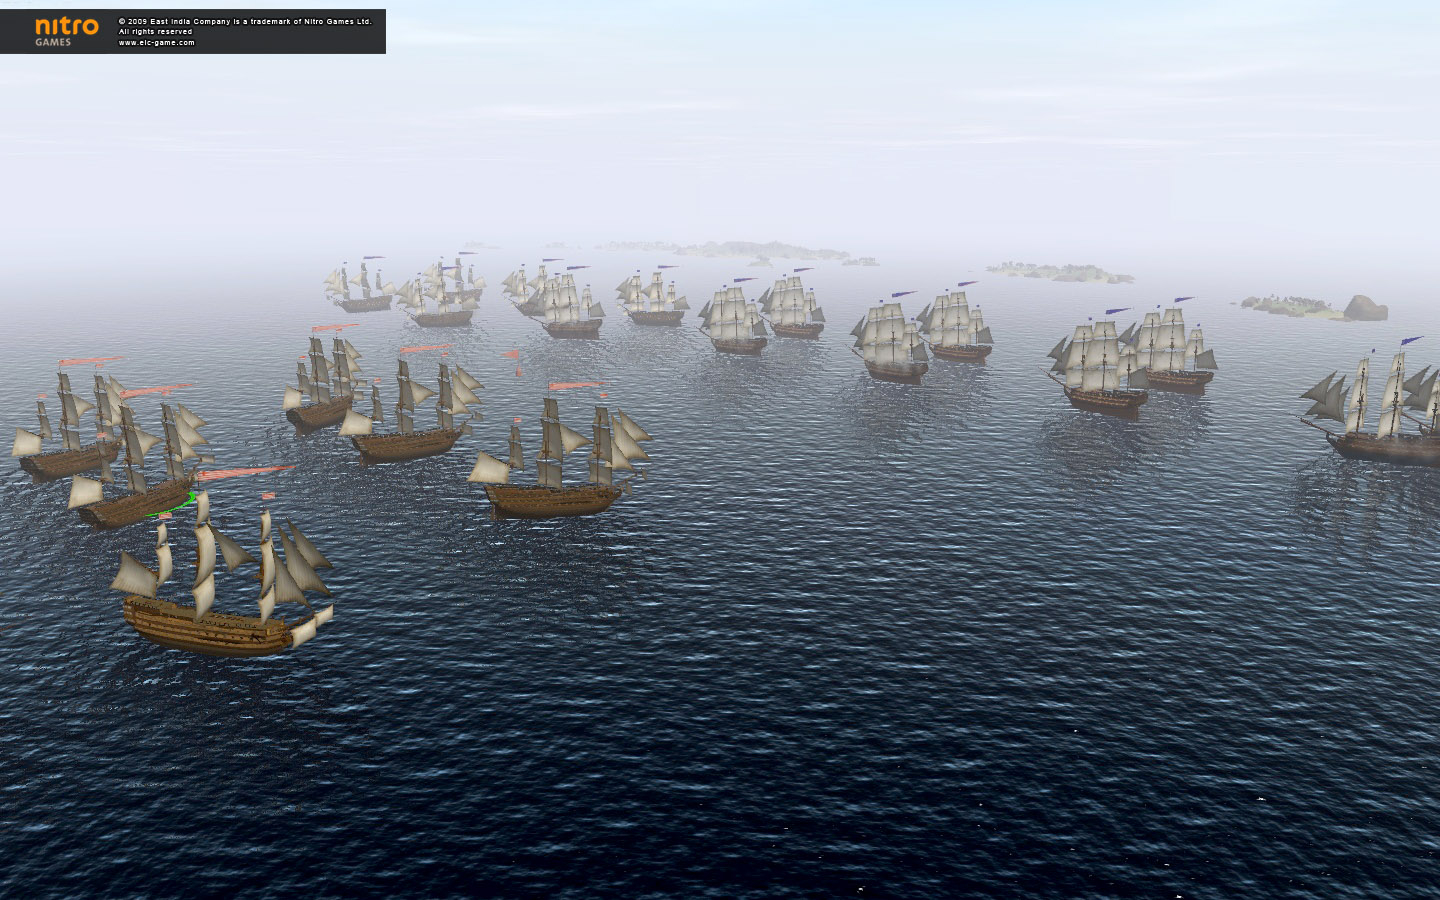 East India Company: Battle of Trafalgar screenshot